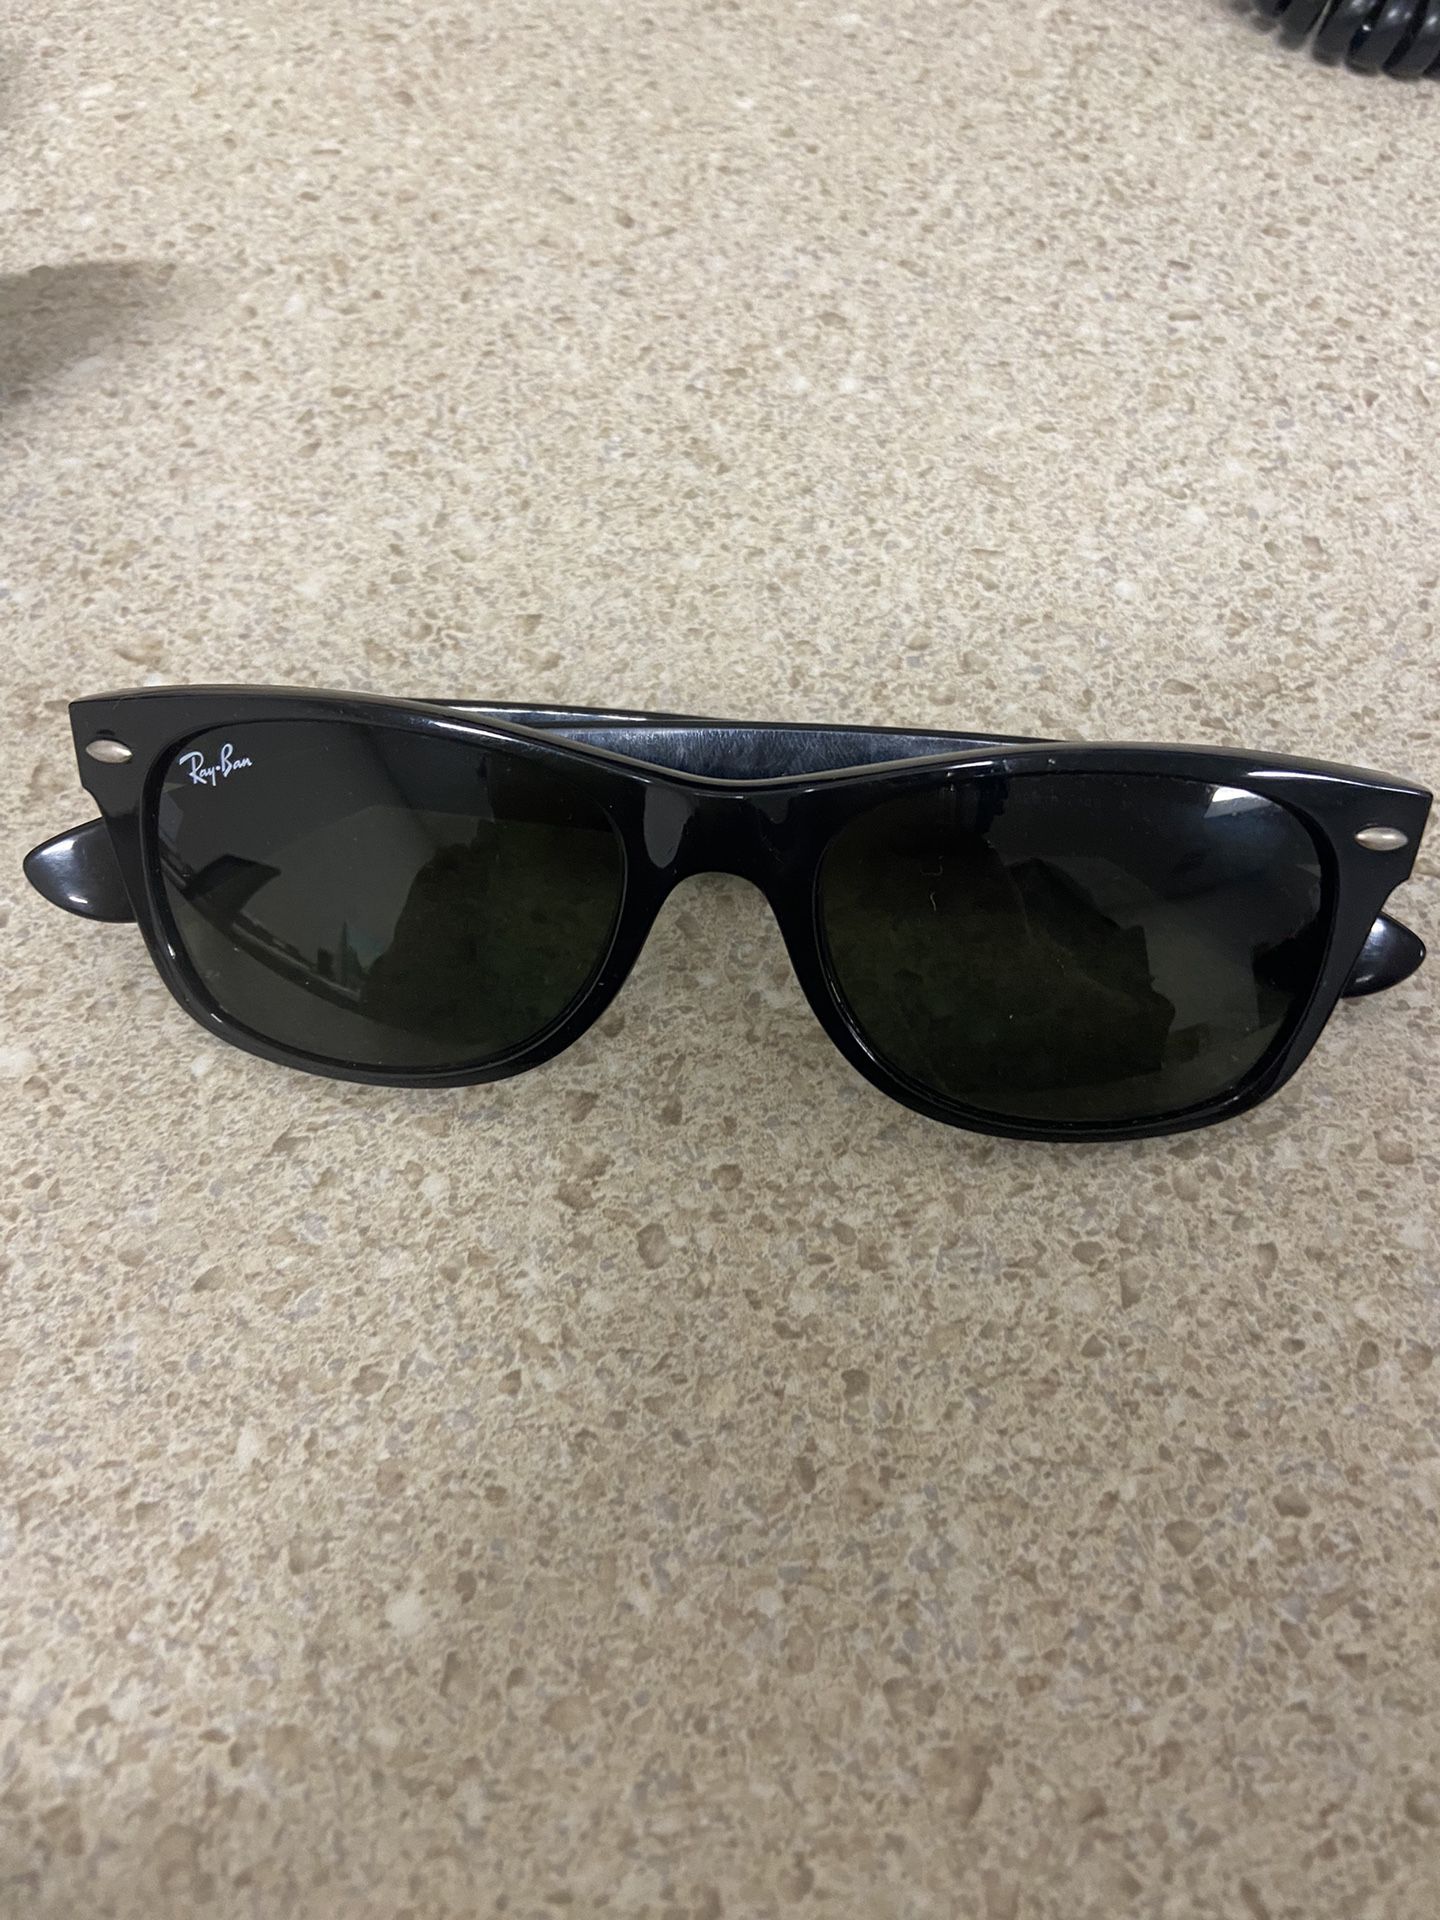 Rayban Wayfare Sunglasses 